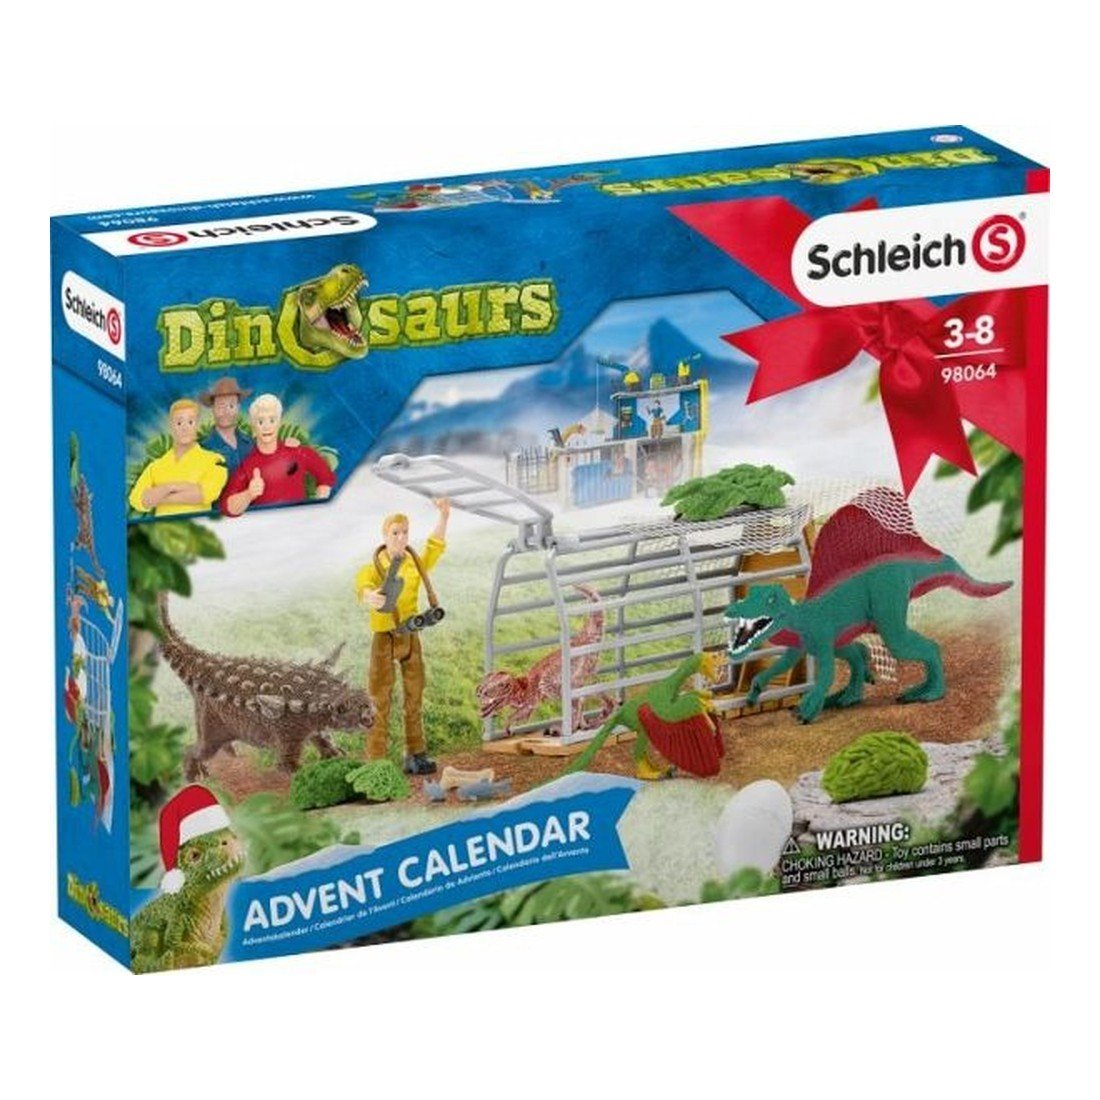 Schleich - Dinosaurs - Advent calendar 2020